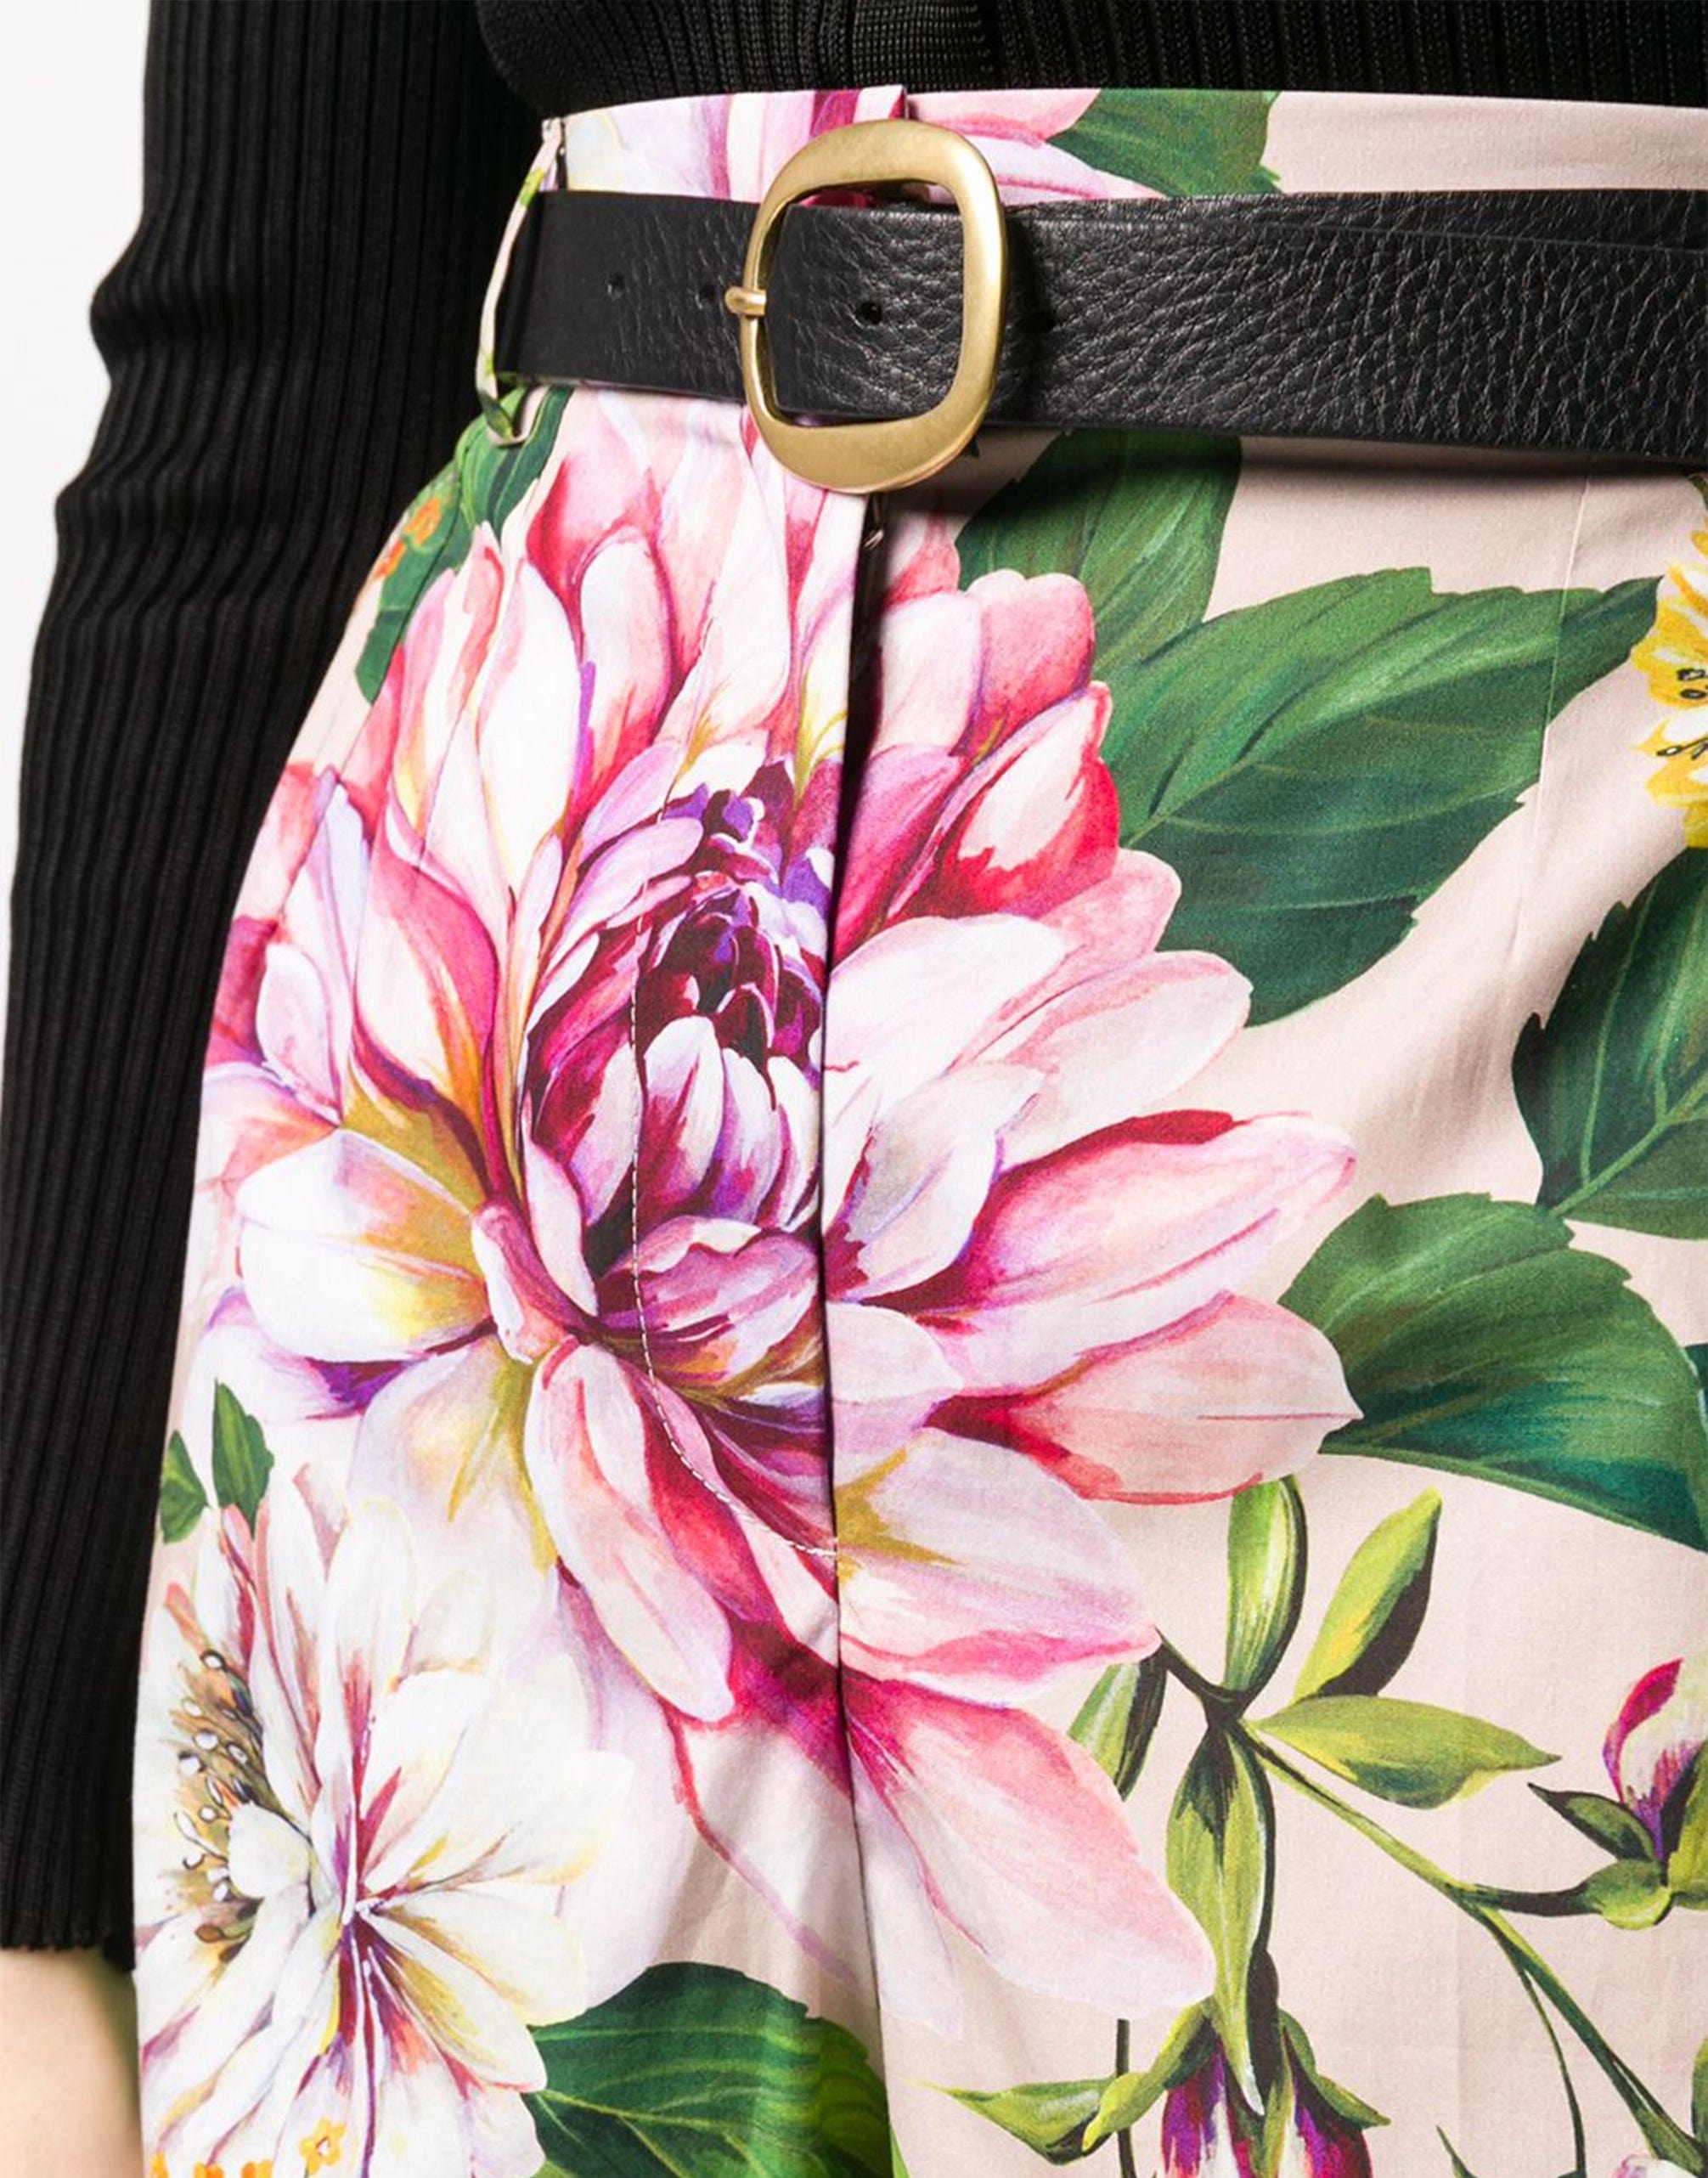 Dolce & Gabbana Floral Print Cotton Shorts